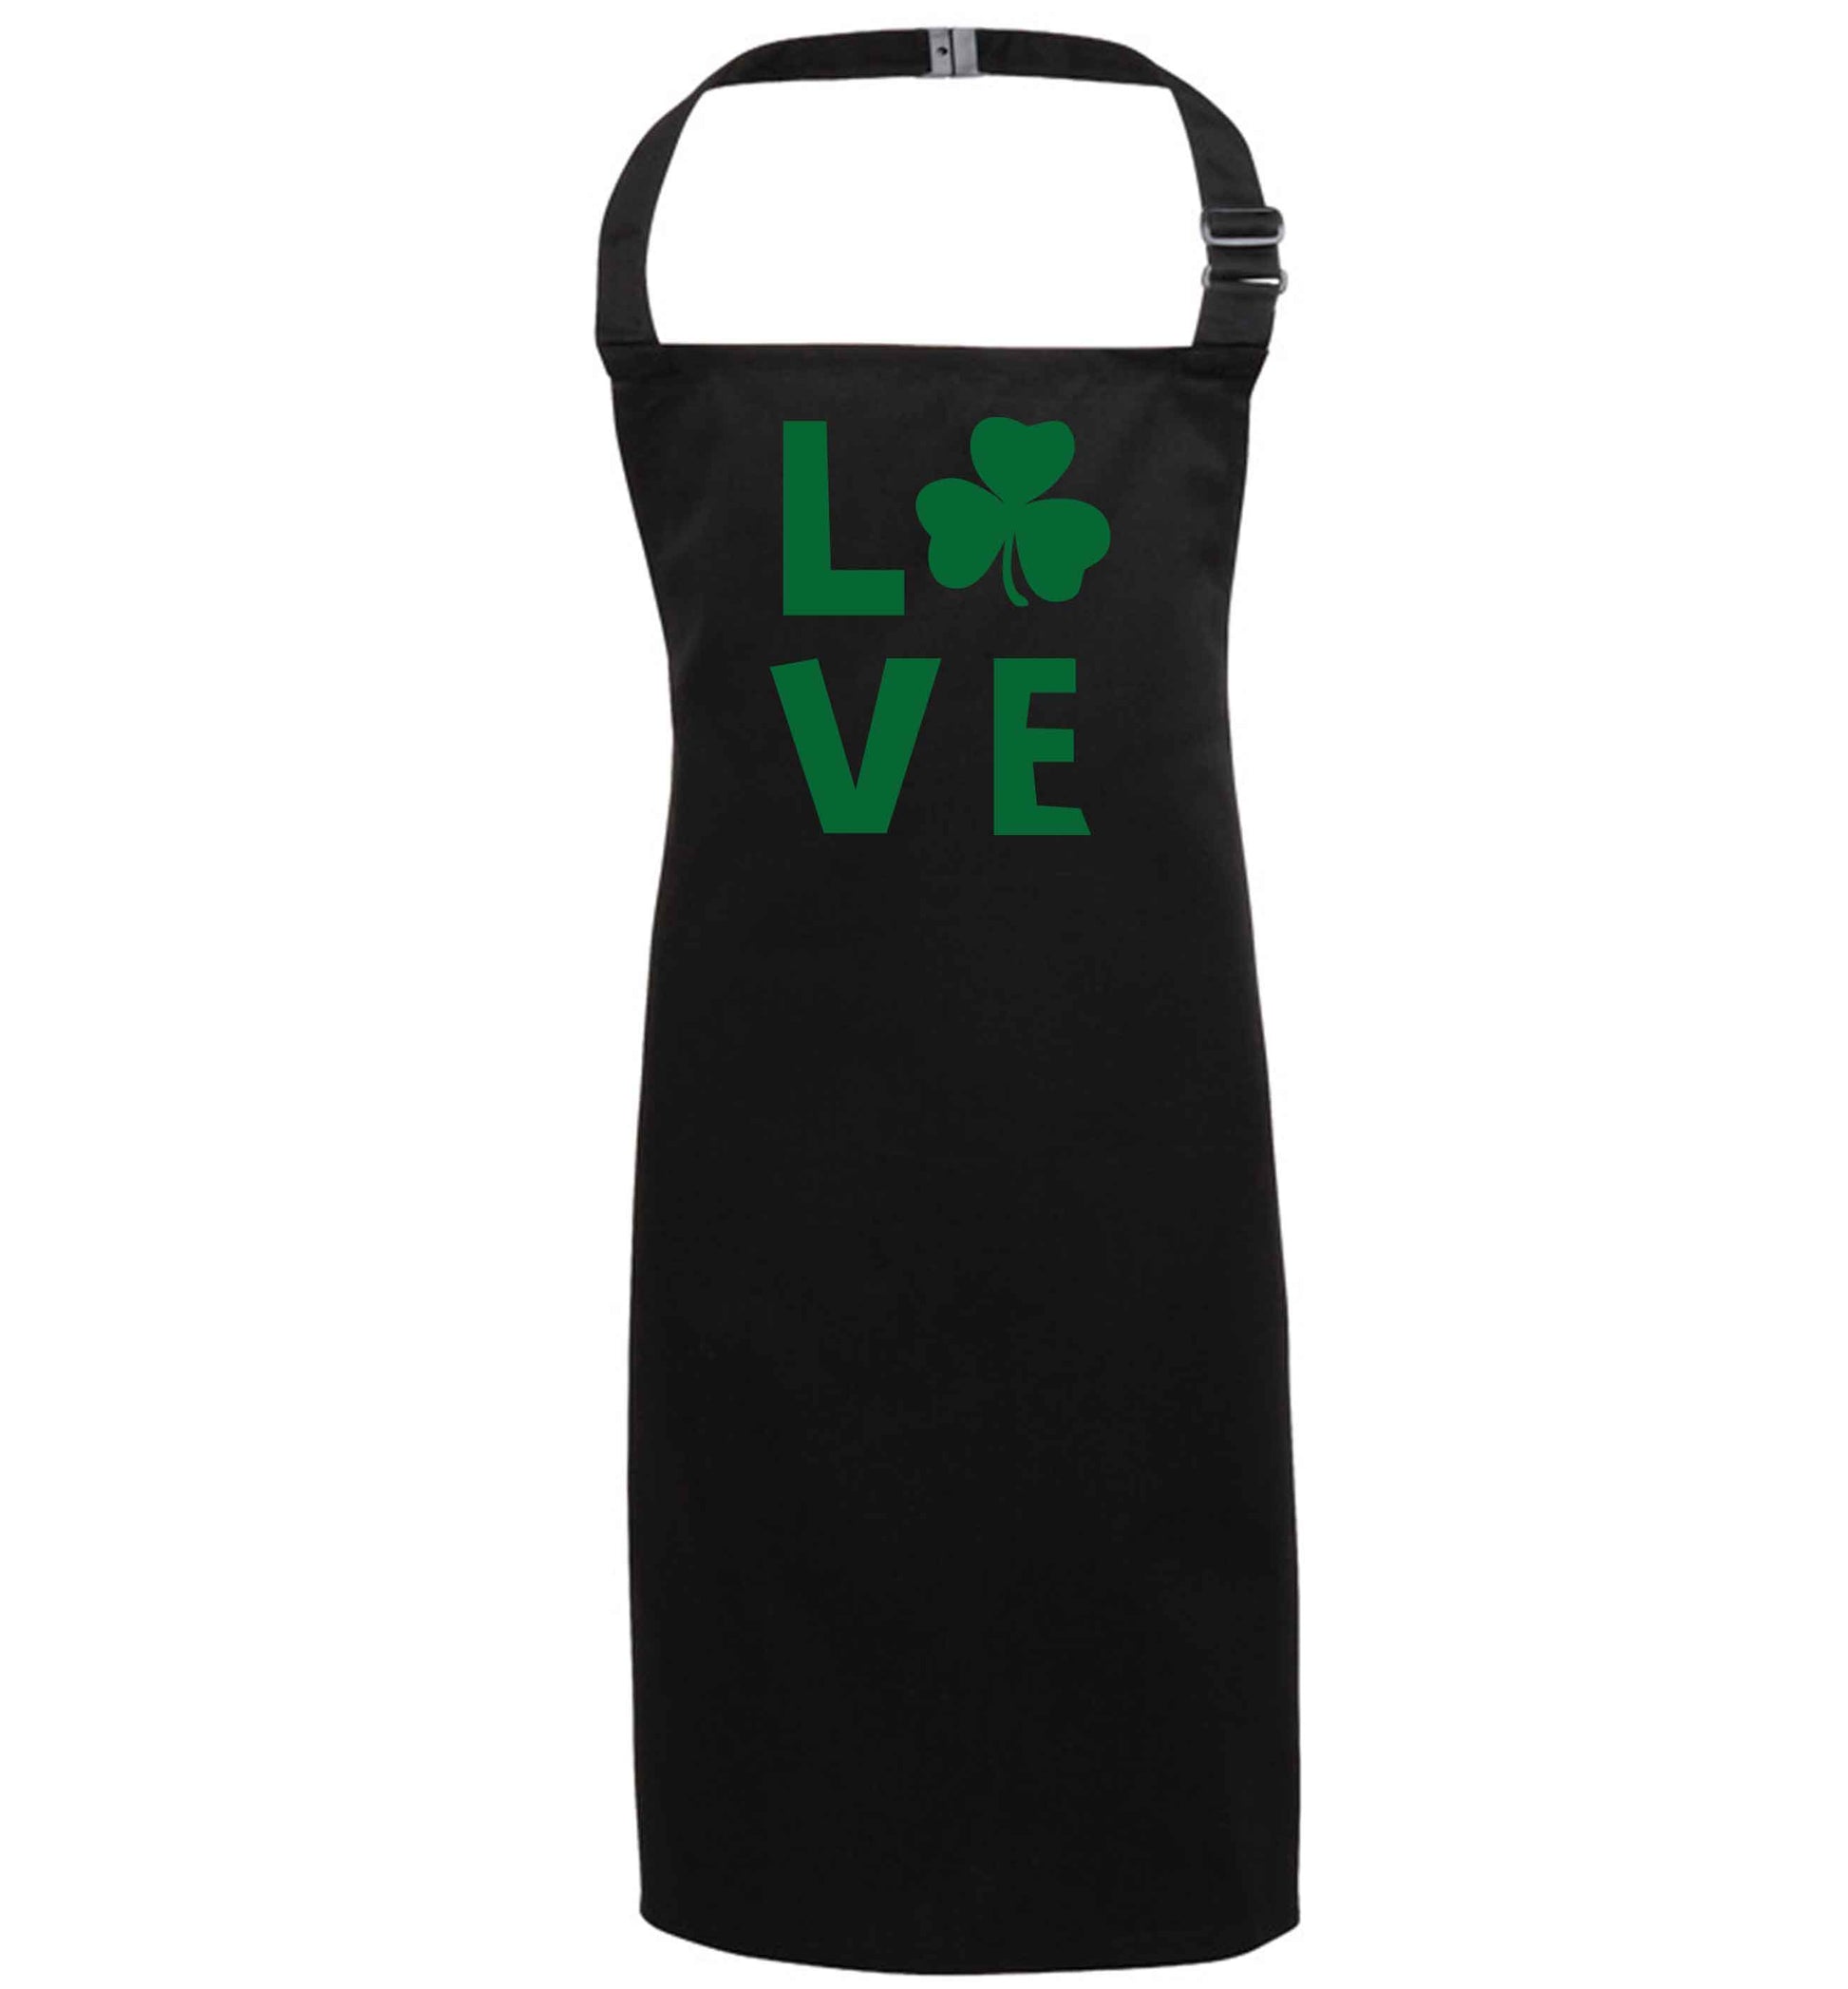 Shamrock love black apron 7-10 years